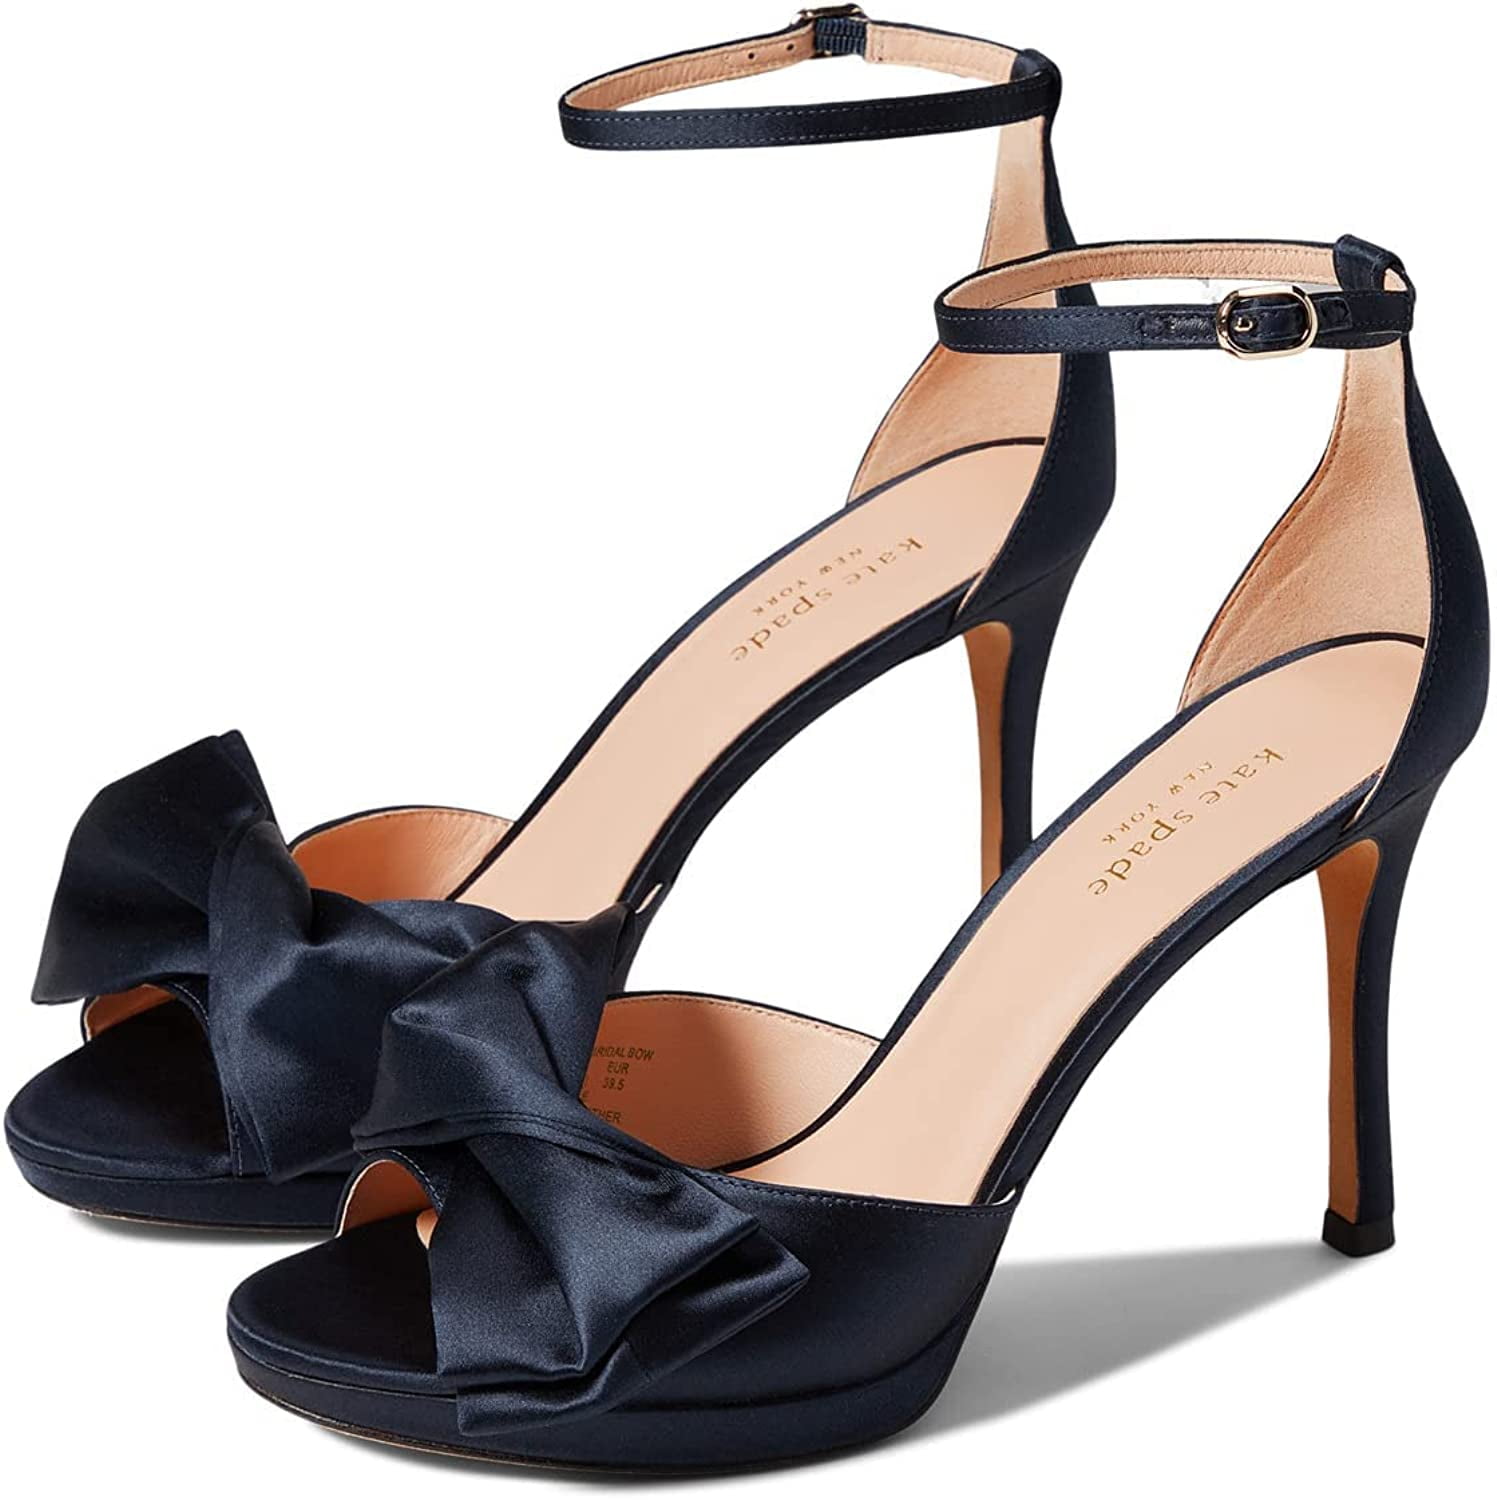 kate spade | Shoes | Kate Spade Brown Satin Bow Heels Size 85 | Poshmark